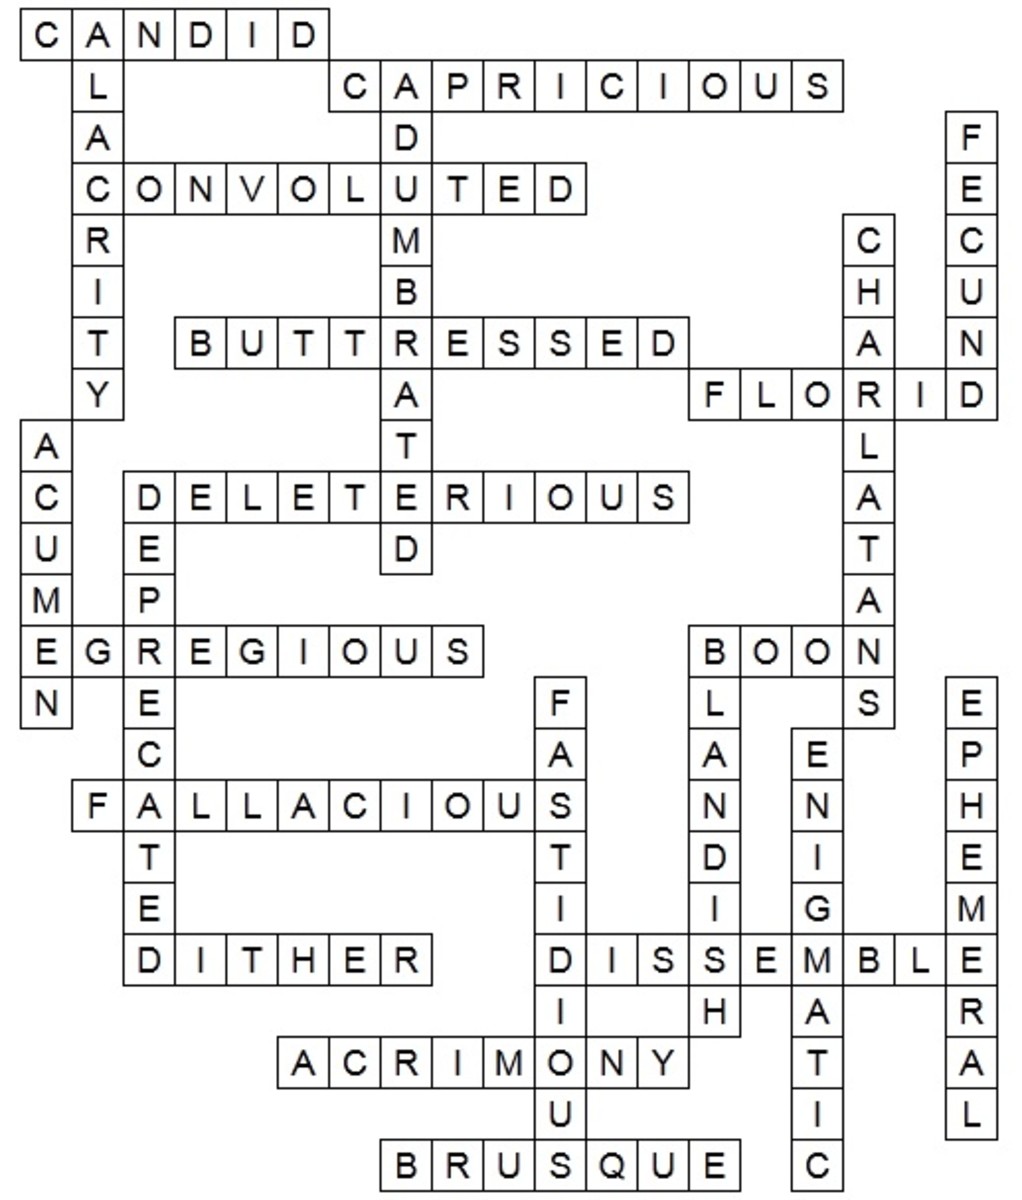 fun-sat-vocab-review-crossword-puzzle-1